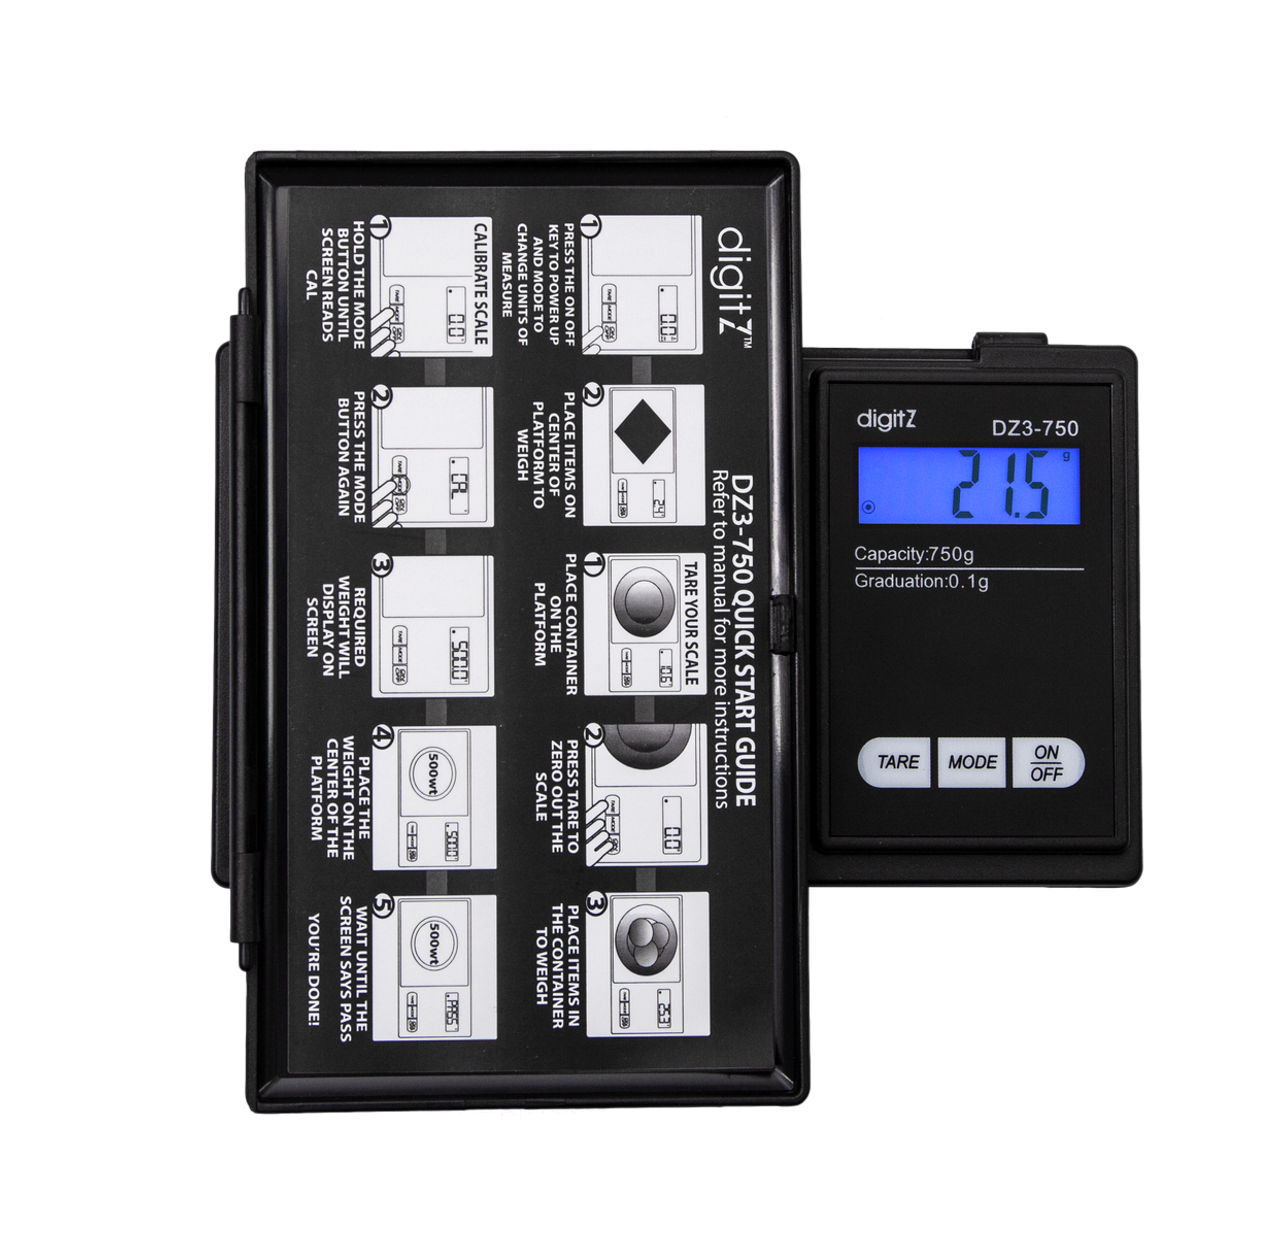 DZ3750g Digital Pocket Scale 750G X 0.1G